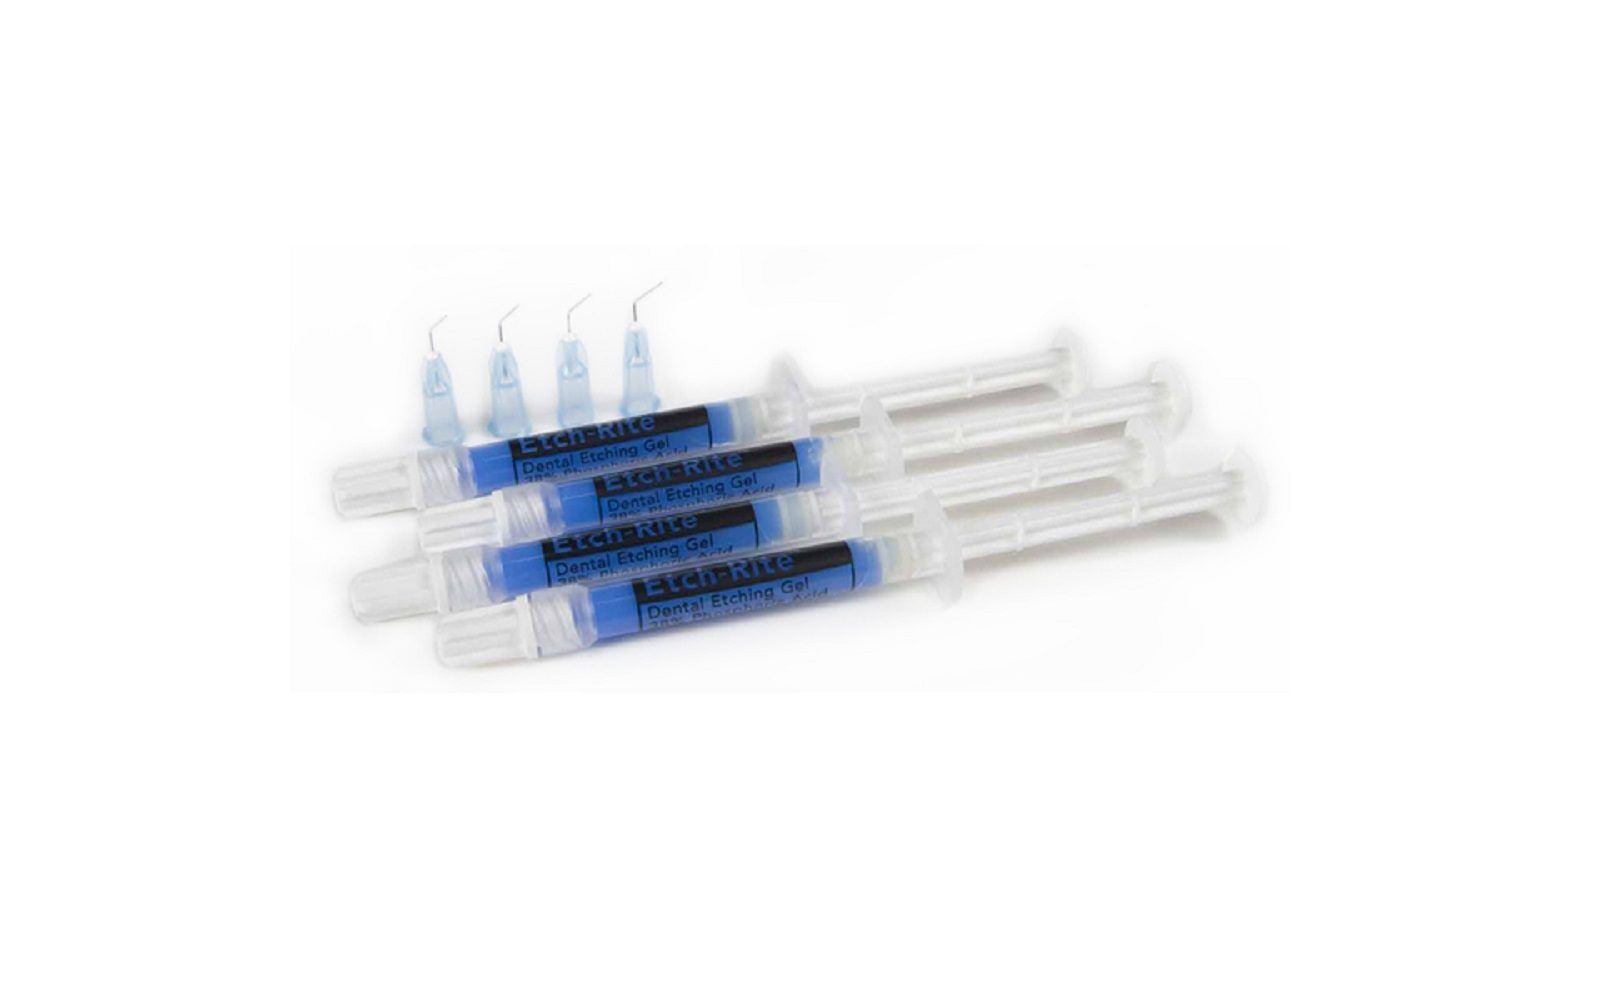 Etch-rite etching gel, 38% phosphoric acid, bulk kit: 24 - 1. 2 ml syringe